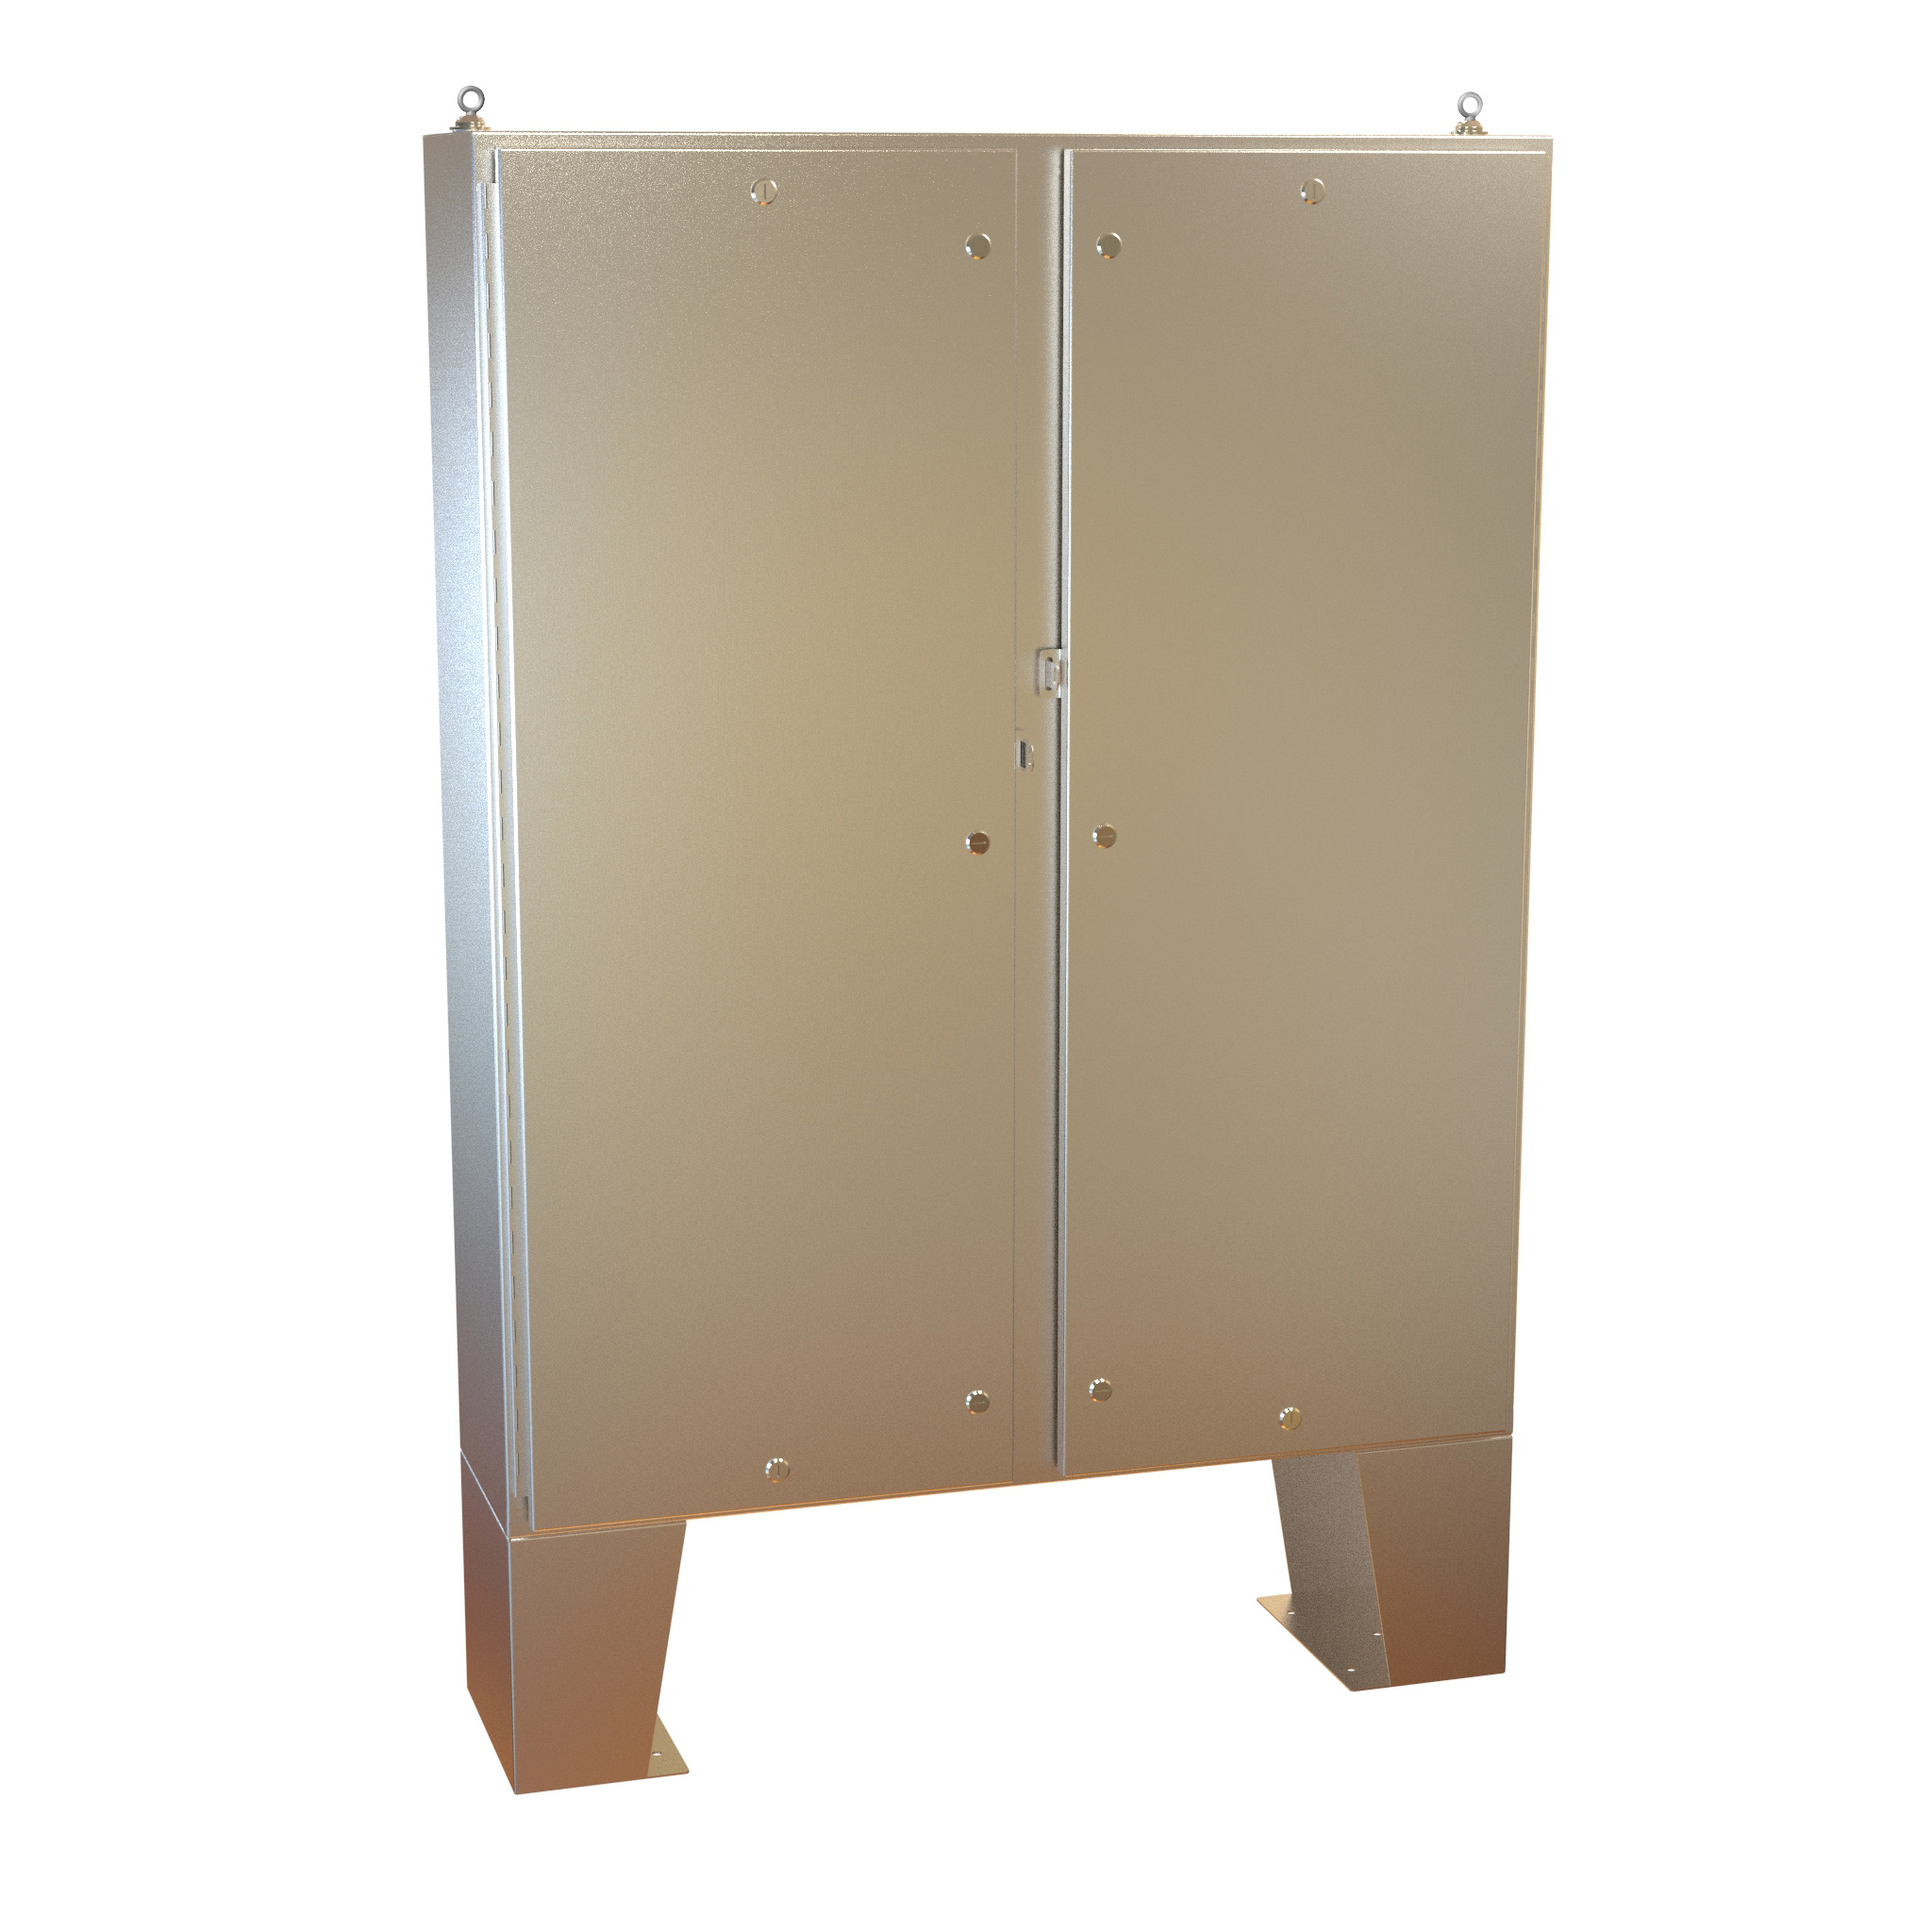 Hammond Manufacturing - Type 4X Stainless Steel Two Door Floormount Enclosure